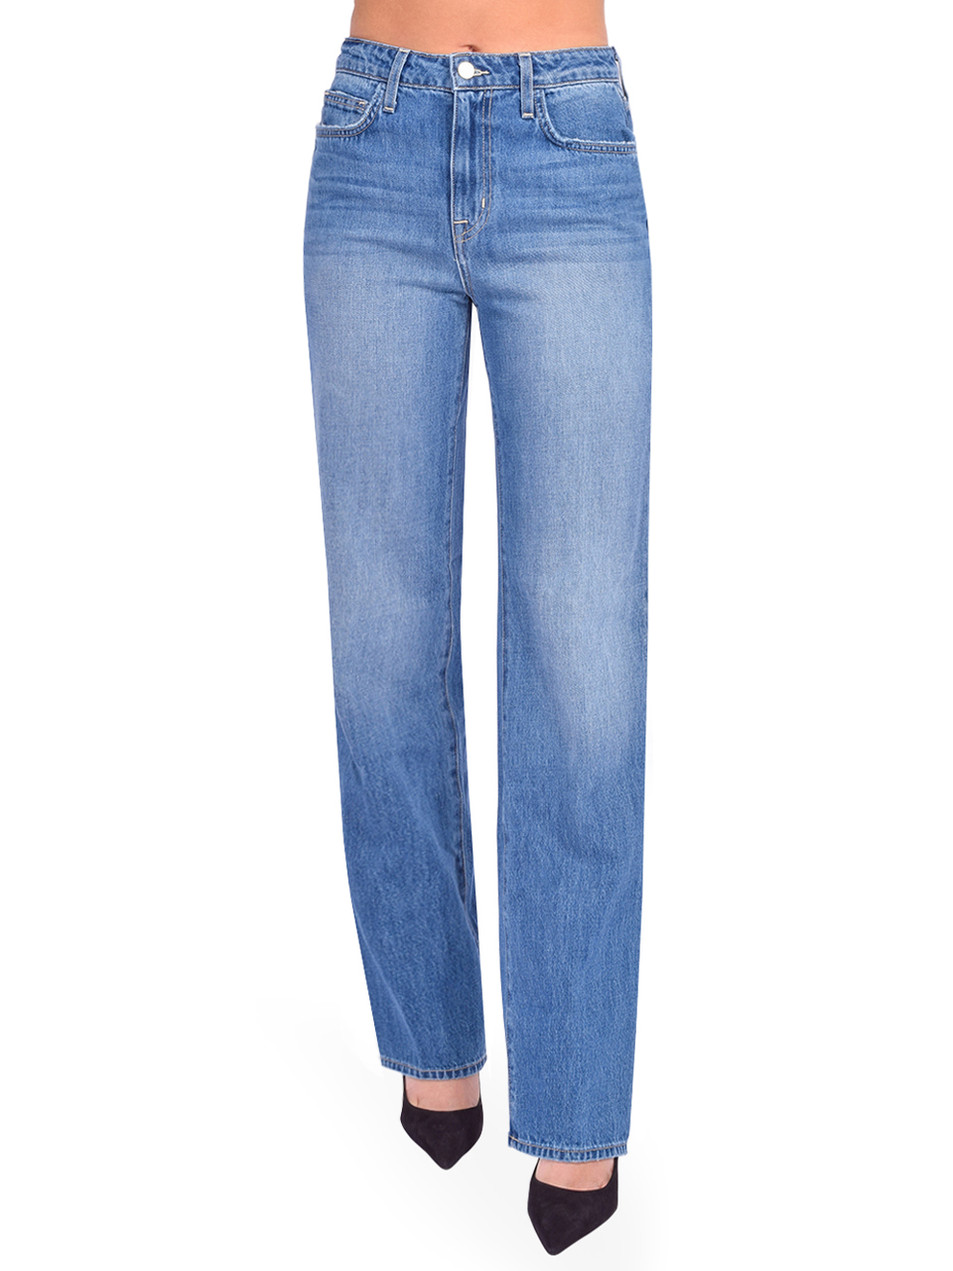 Levi's Curve-Hugging (Sizes 0-4) Jeans – Mother Jones